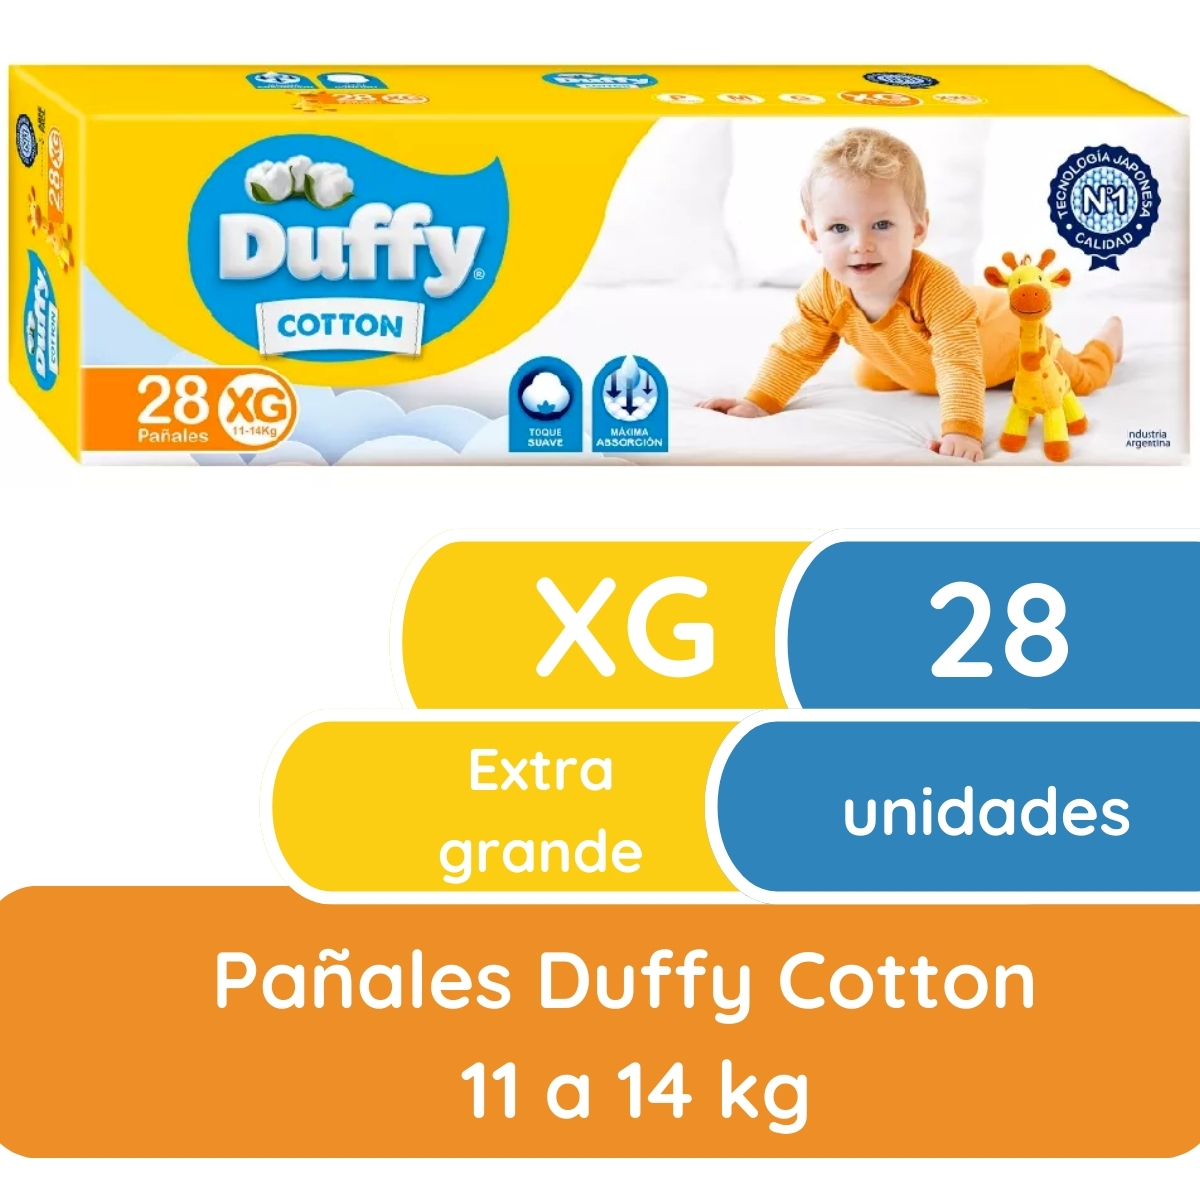 Imagen 1 de 4 de Pañales Duffy Cotton XG x 28 unidades